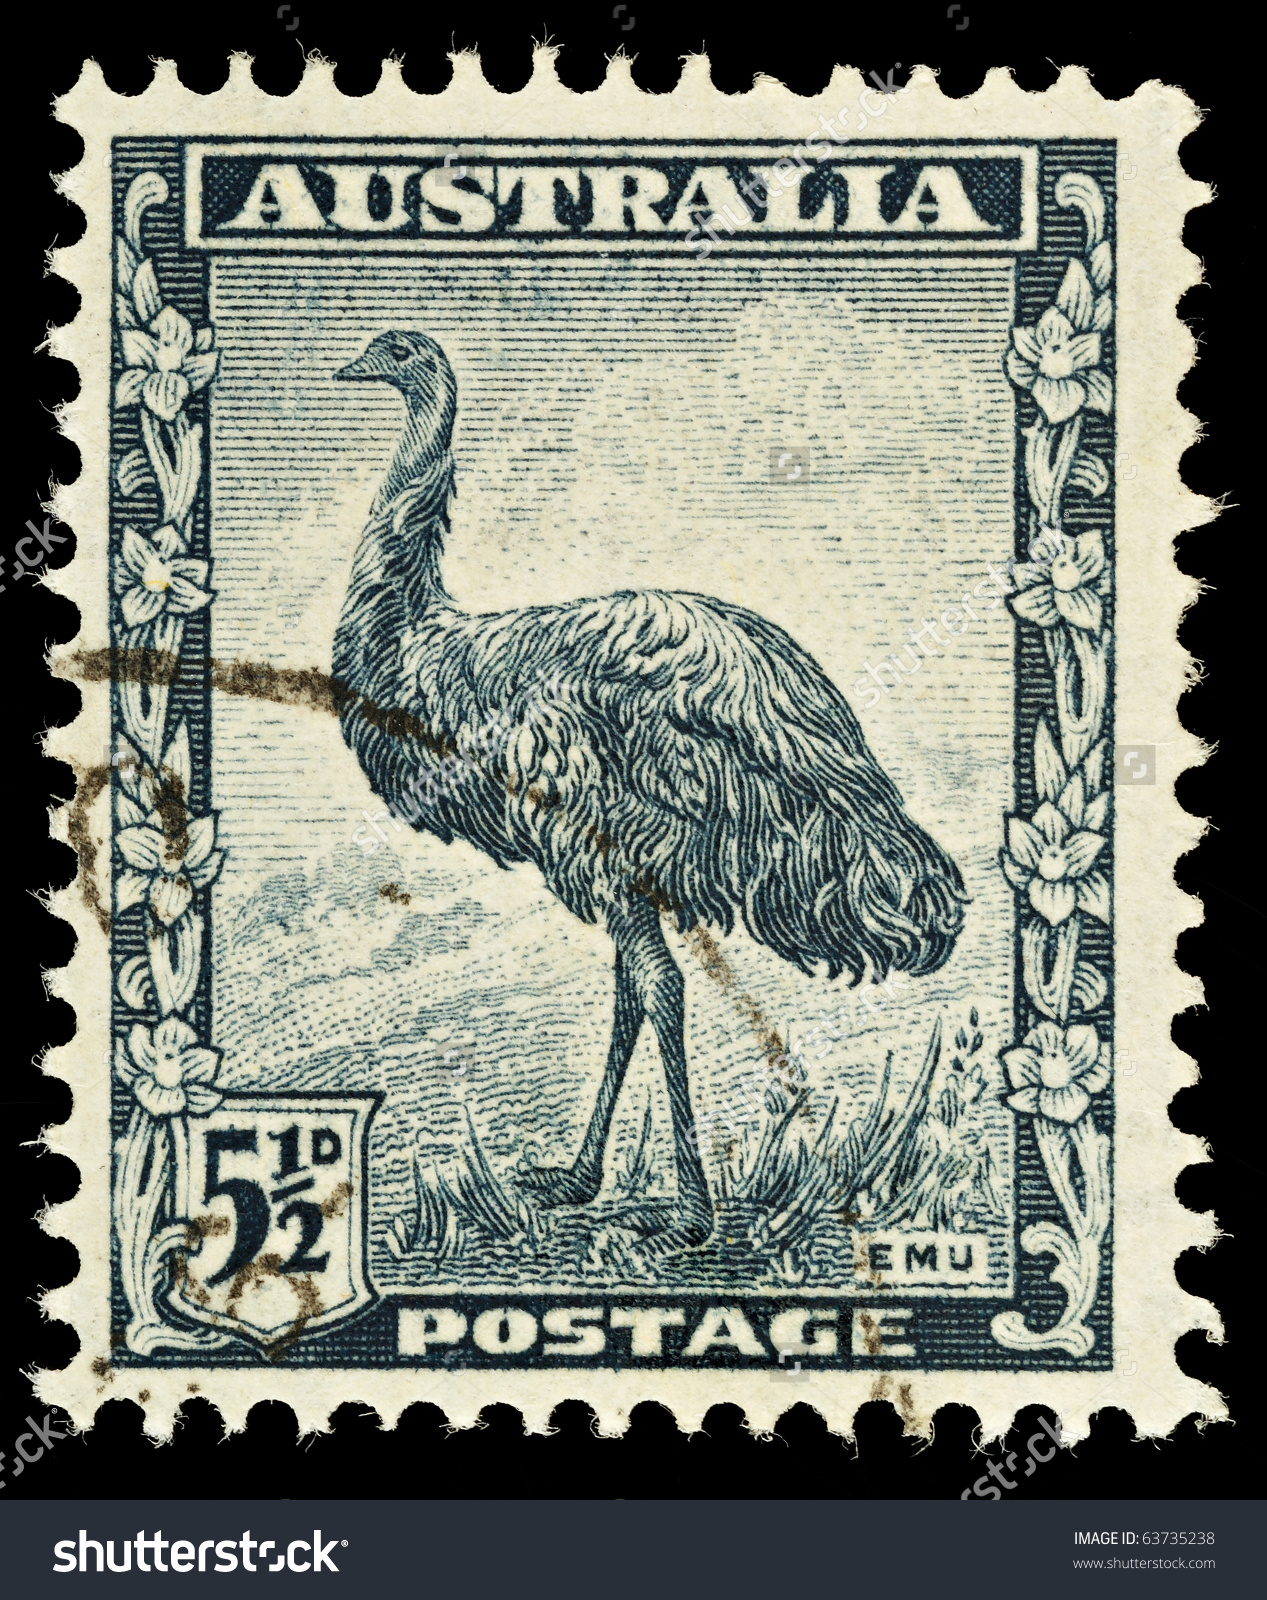 AUSTRALIA - CIRCA 1942: An Australian Used Postage Stamp showing an ...